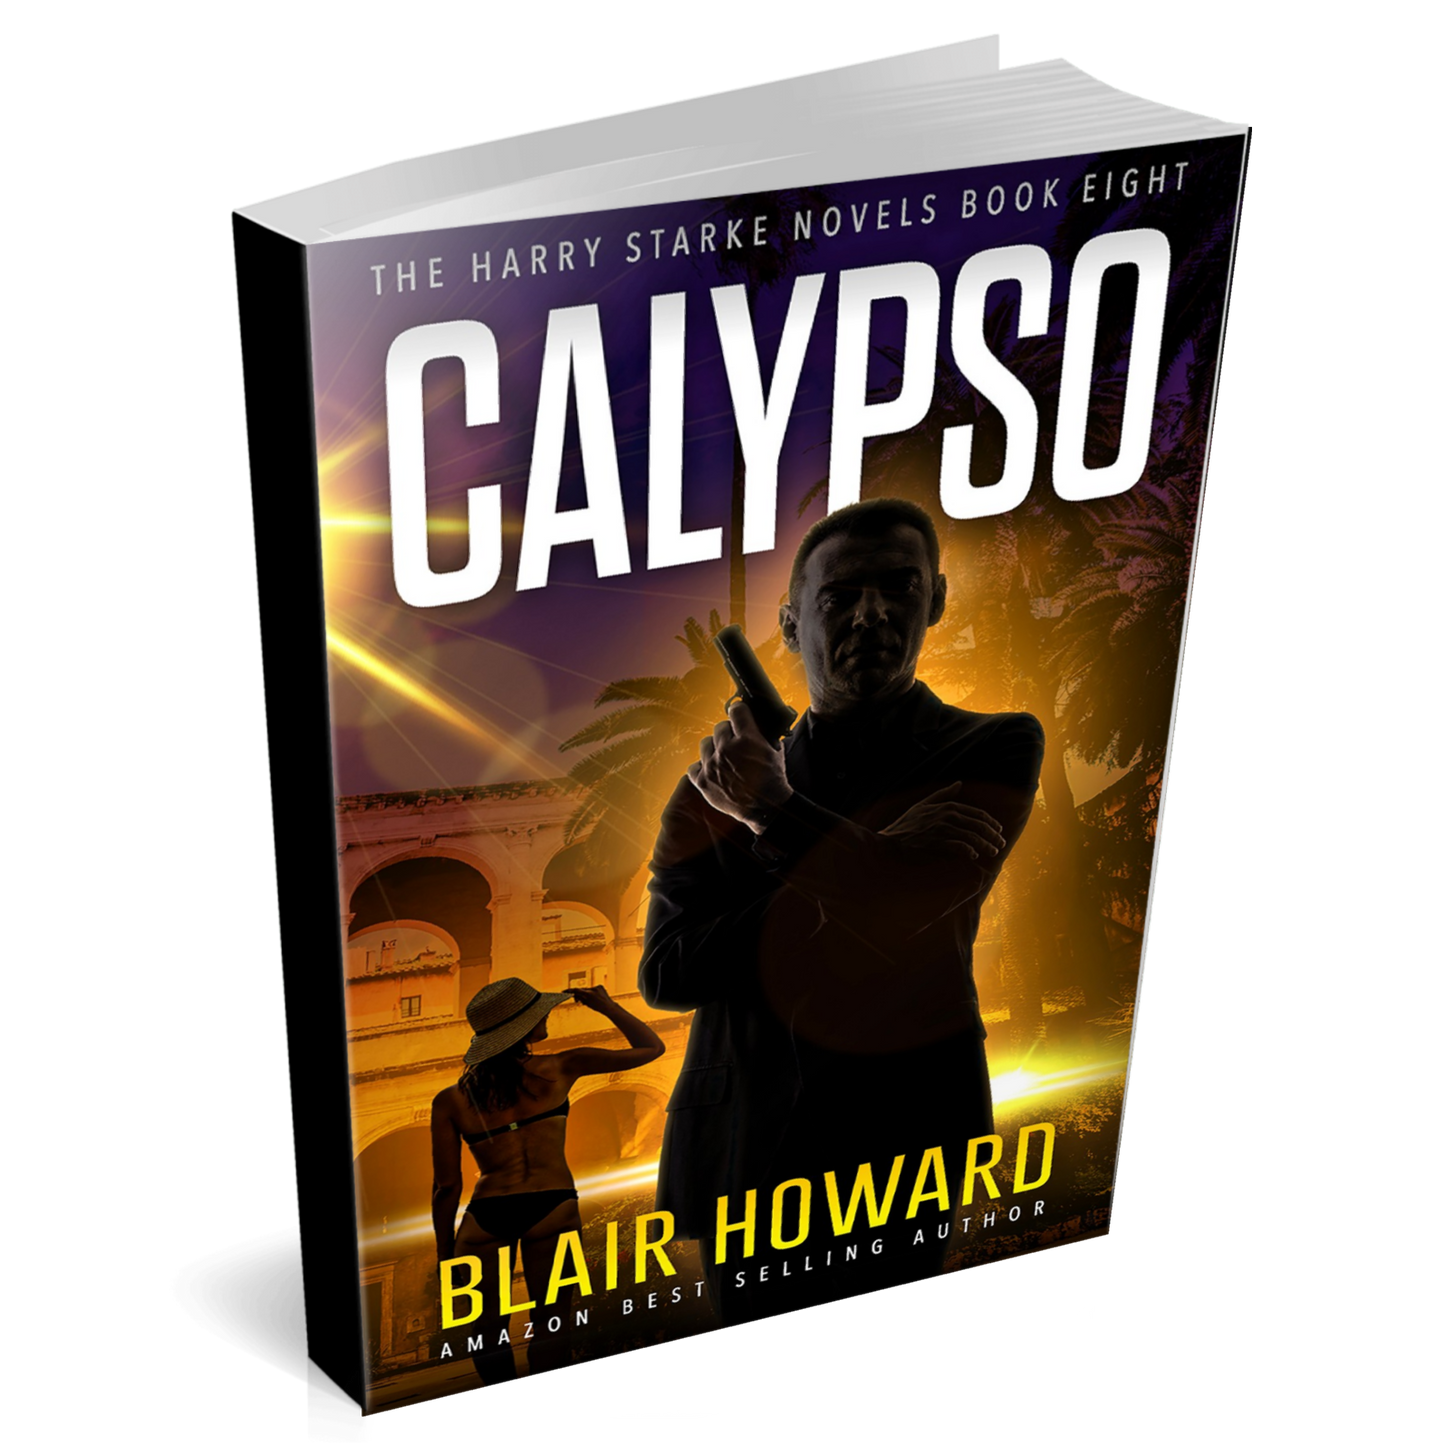 Calypso (The Harry Starke Novels Book 8)